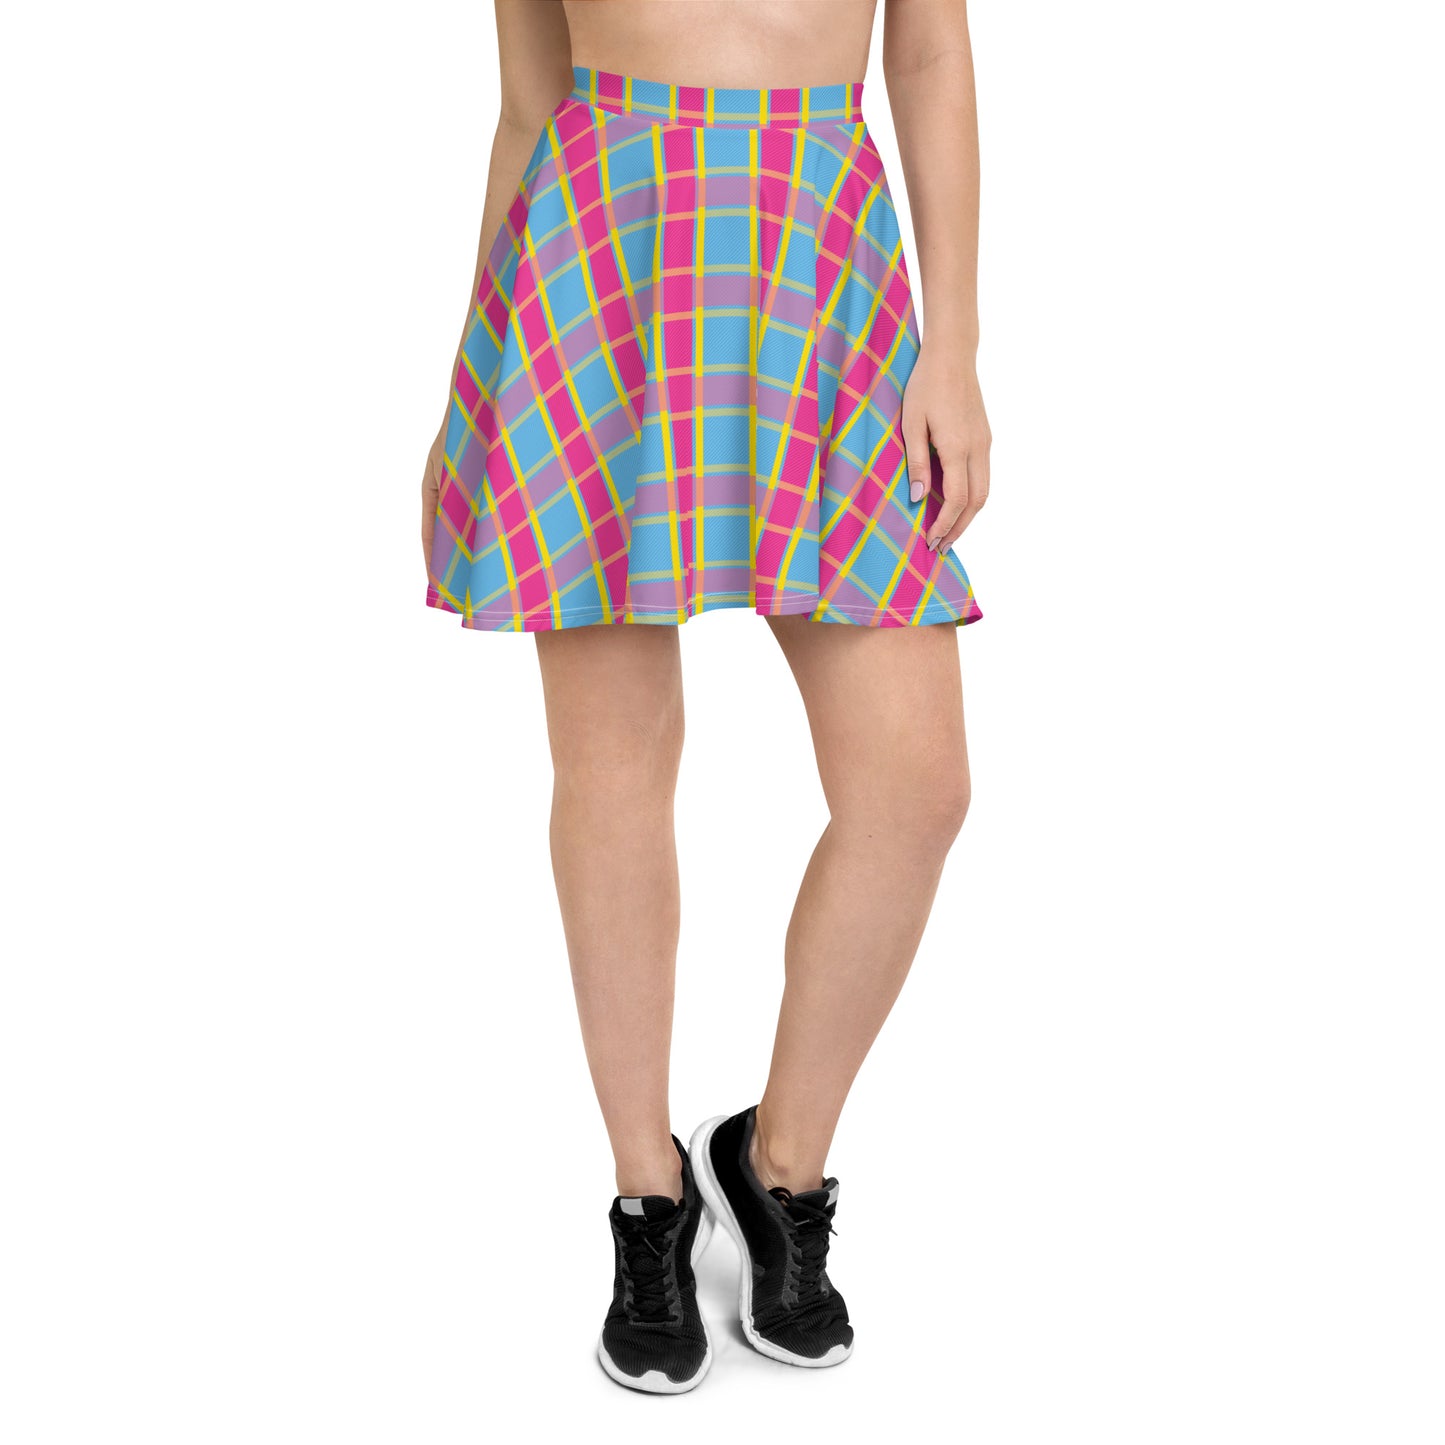 Pansexual Pride Skater Skirt - LGBTQIA Pink, Blue, Yellow Flag Flared Skirt - Parade Club Vacation Running